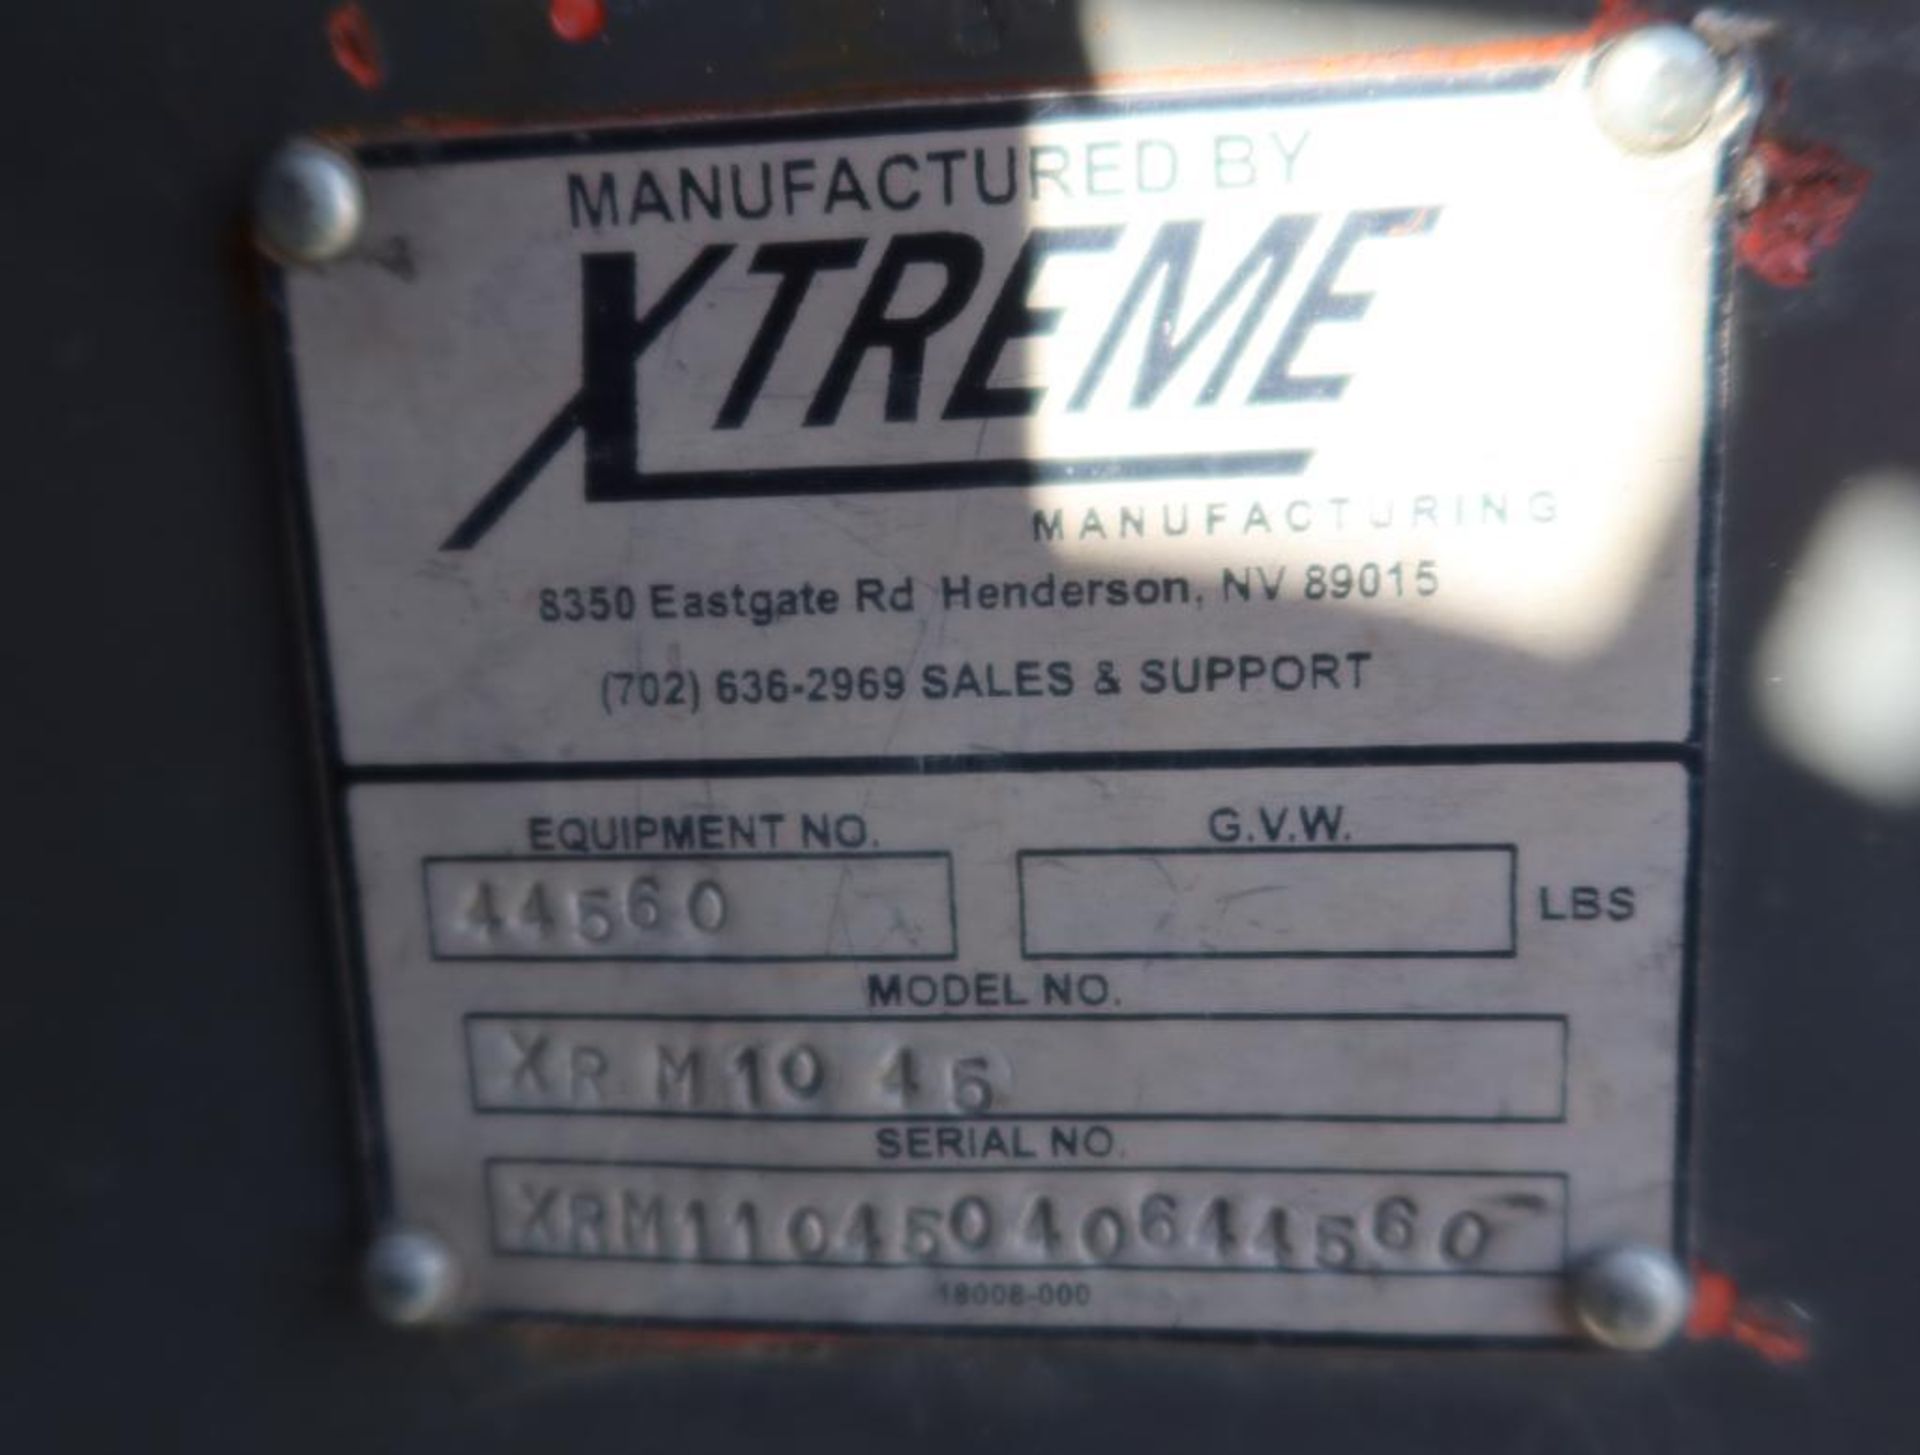 Xtreme XRM1045 Telehandler Fork Lift, 45' Lift Height, 30' Forward Reach, 10,000 Lb. Cap., Diesel, S - Image 8 of 8